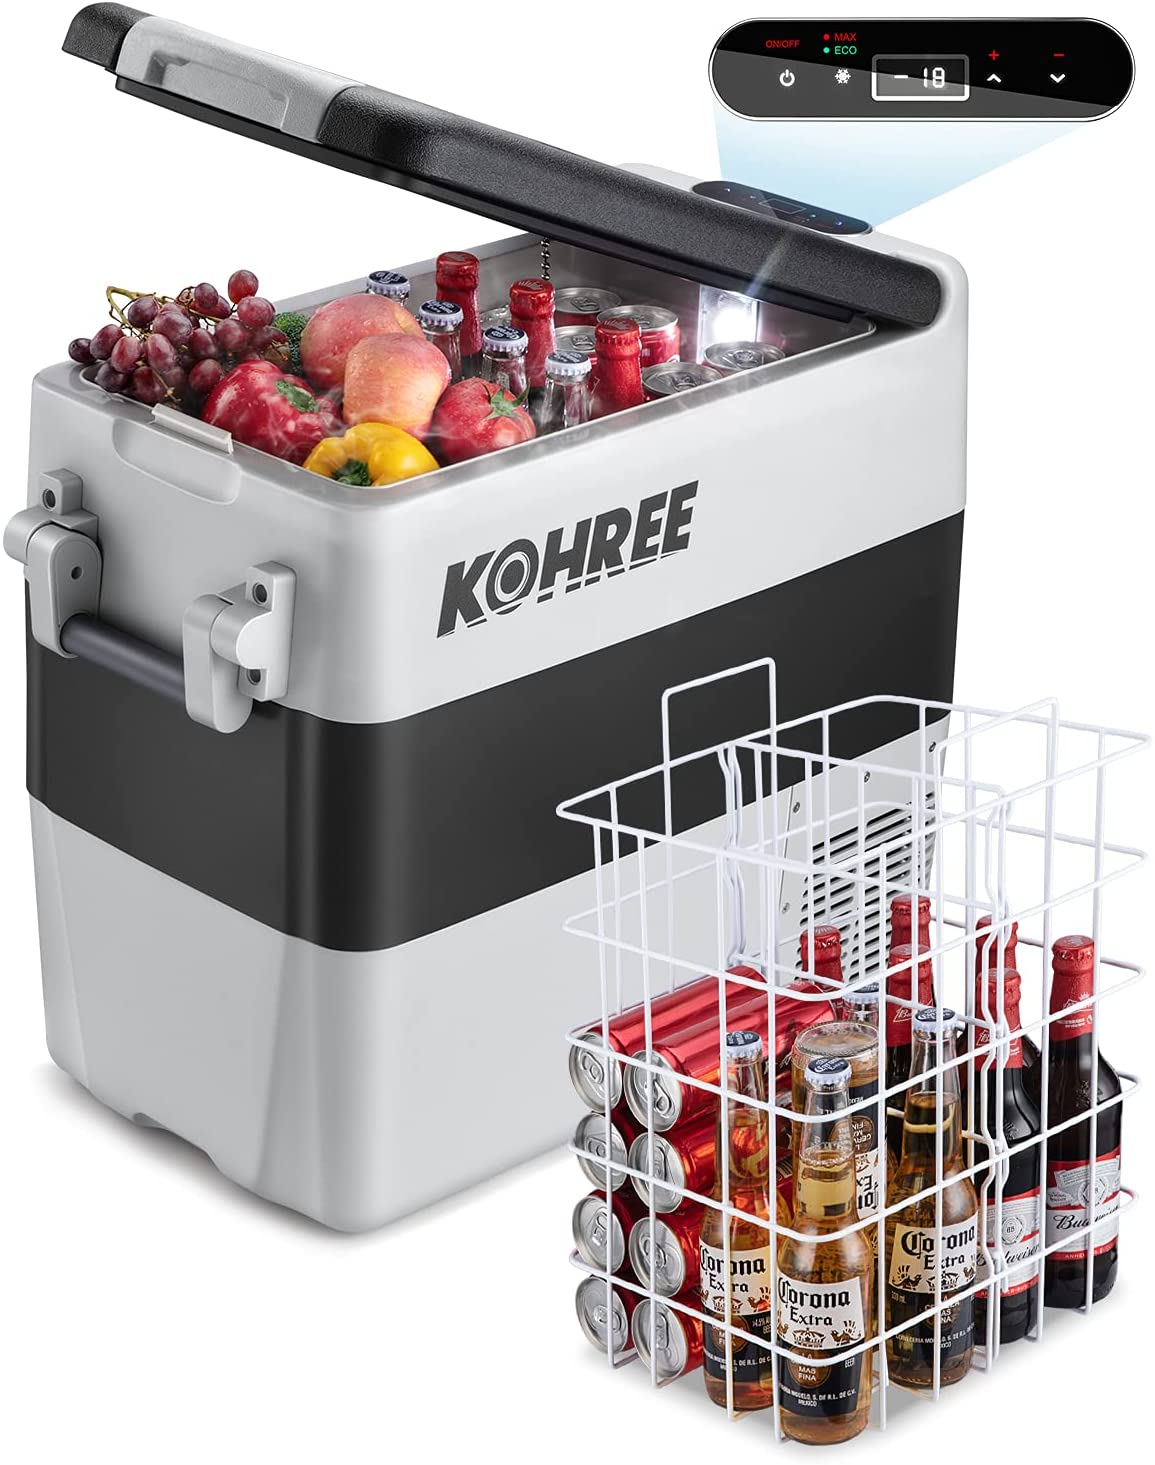 Portable Kohree Electric Cooler Refrigerator